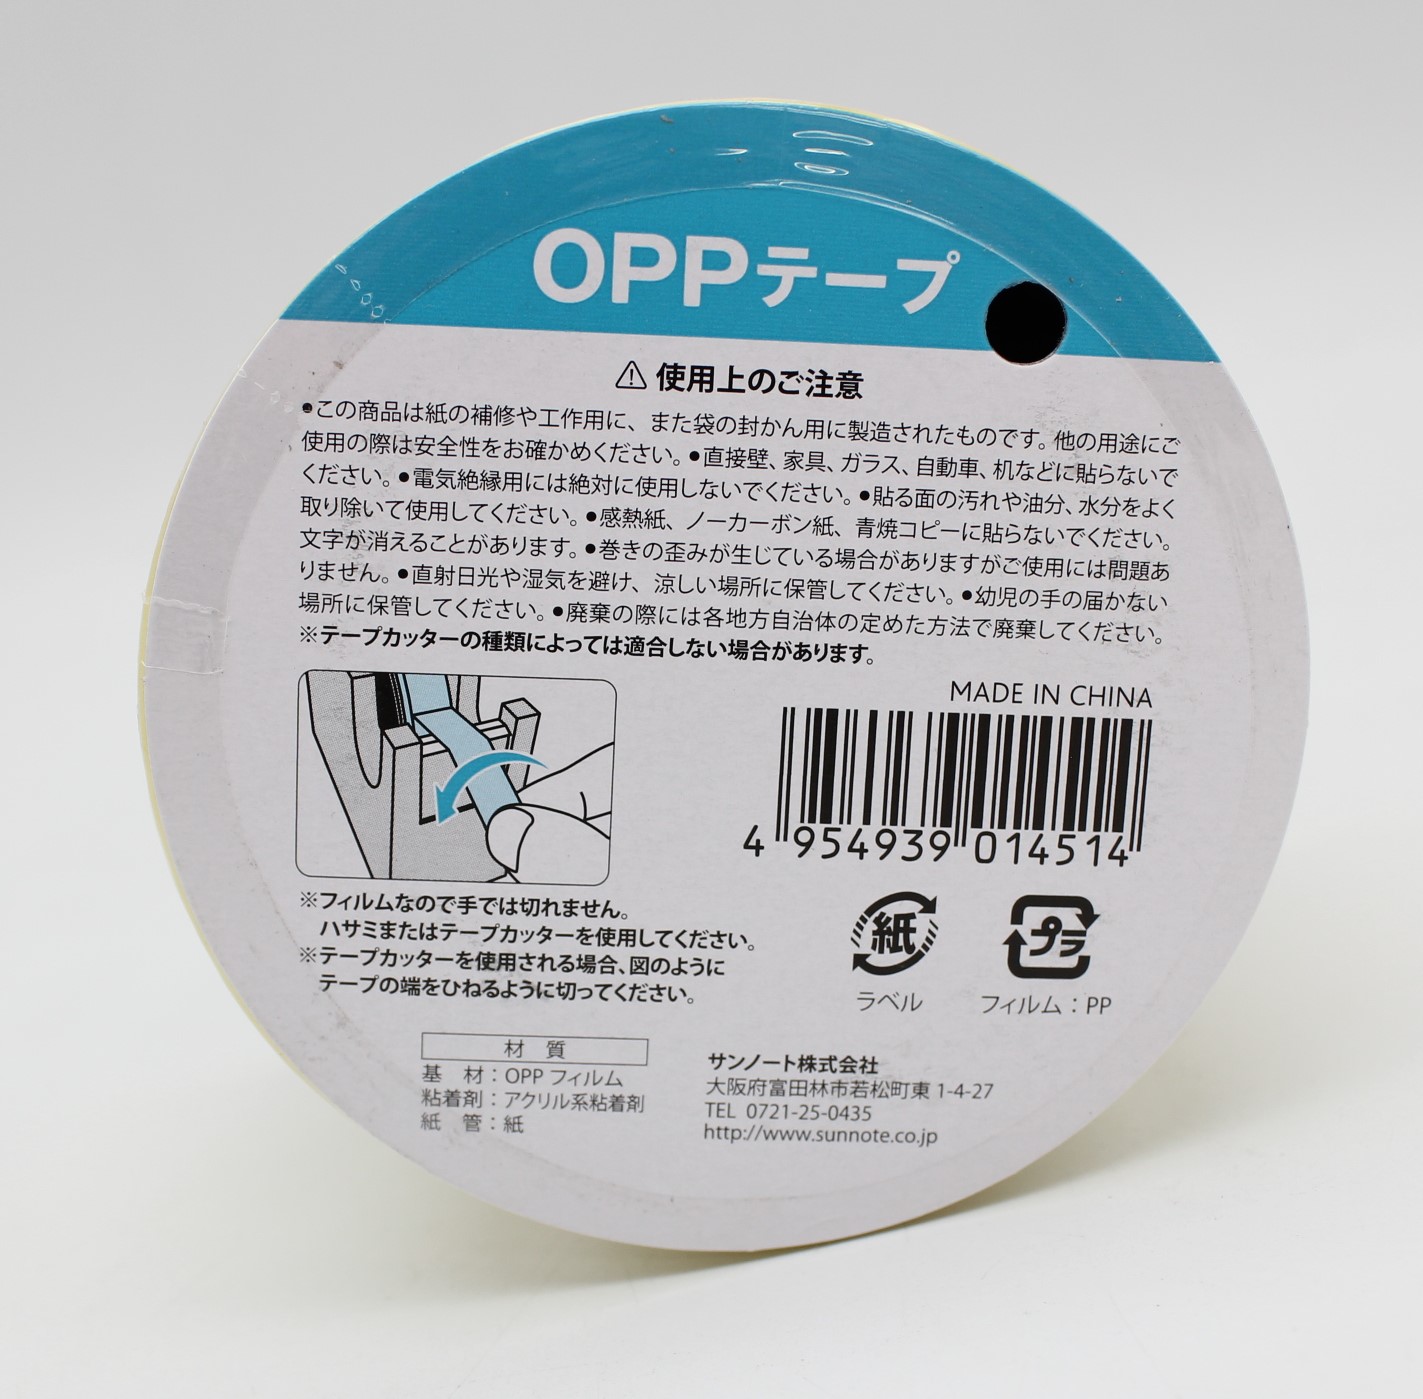 OPPテープ　15ｍｍ×20ｍ 5巻